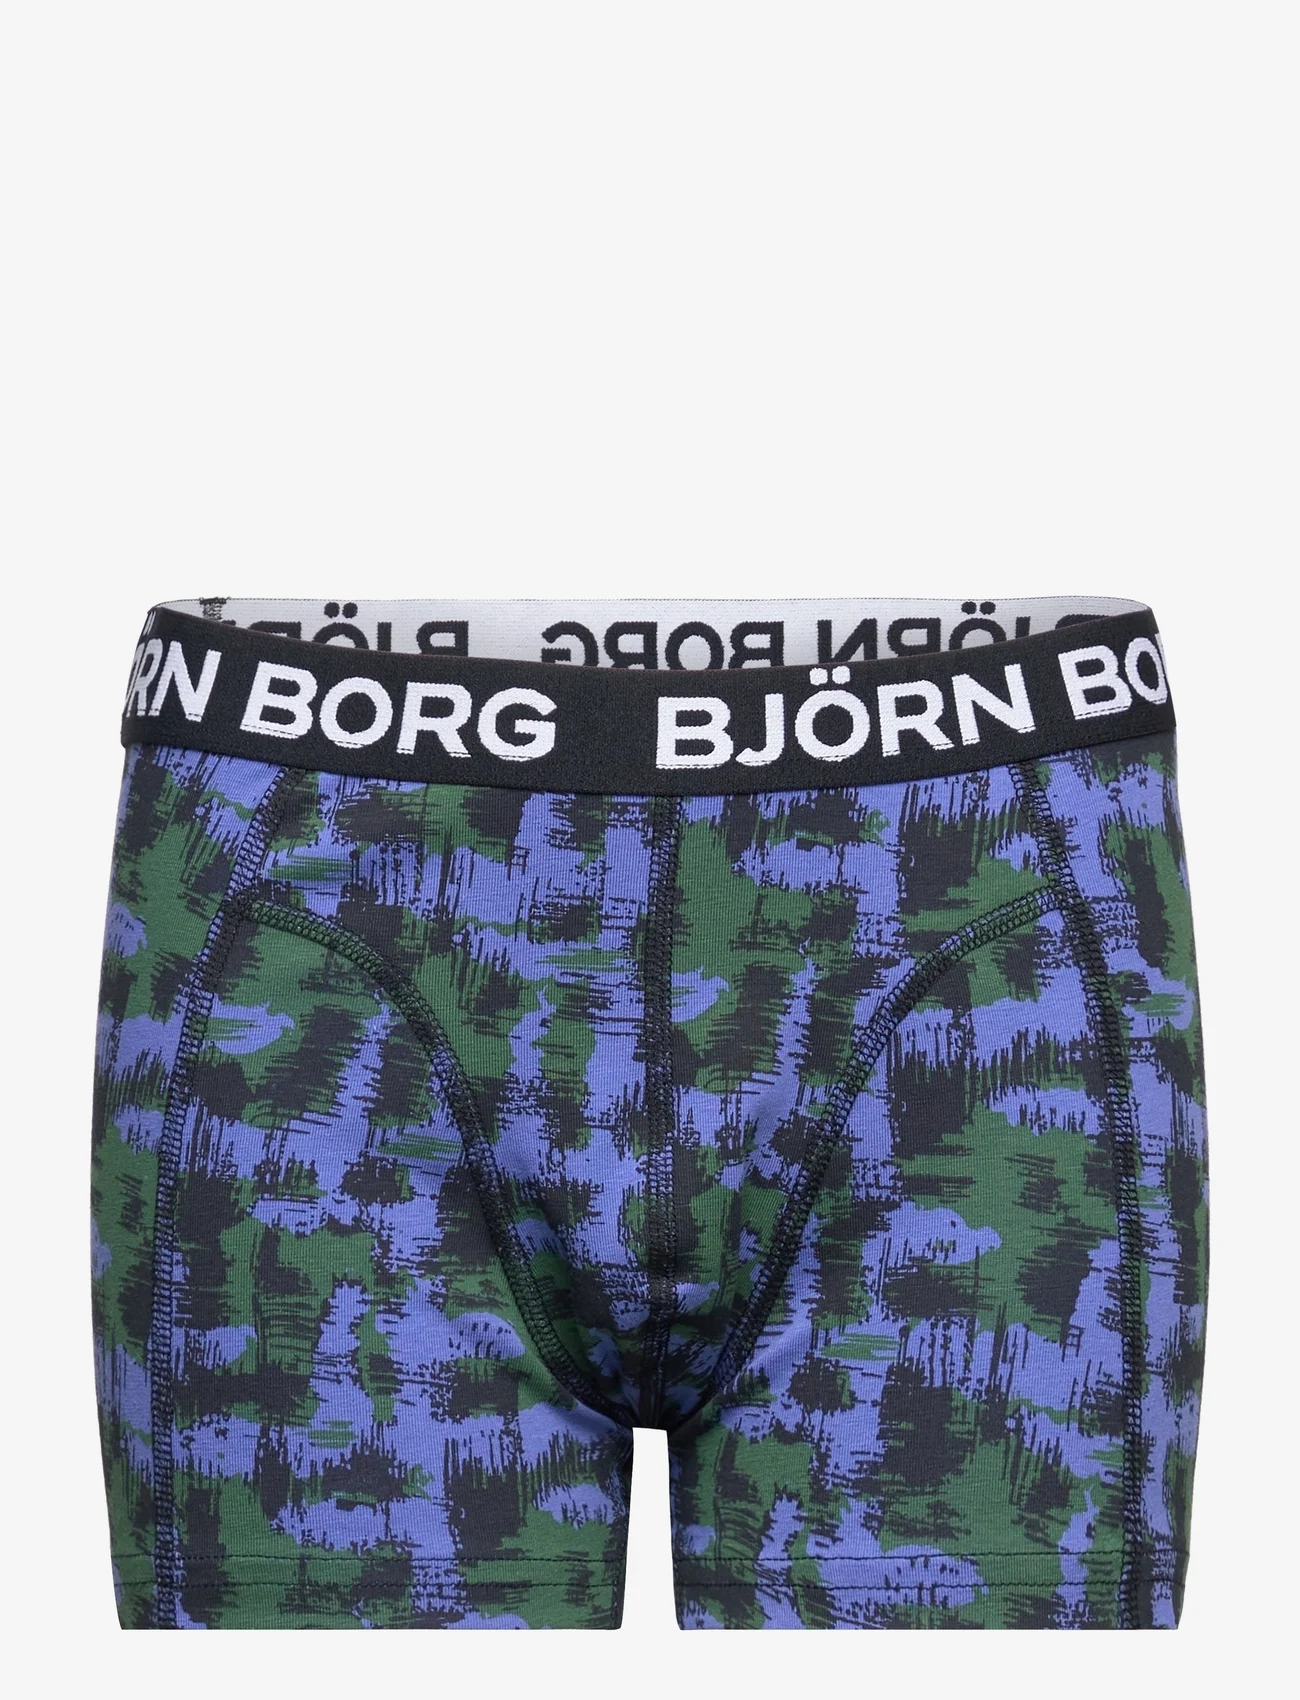 Björn Borg - CORE BOXER 2p - unterhosen - multipack 1 - 1